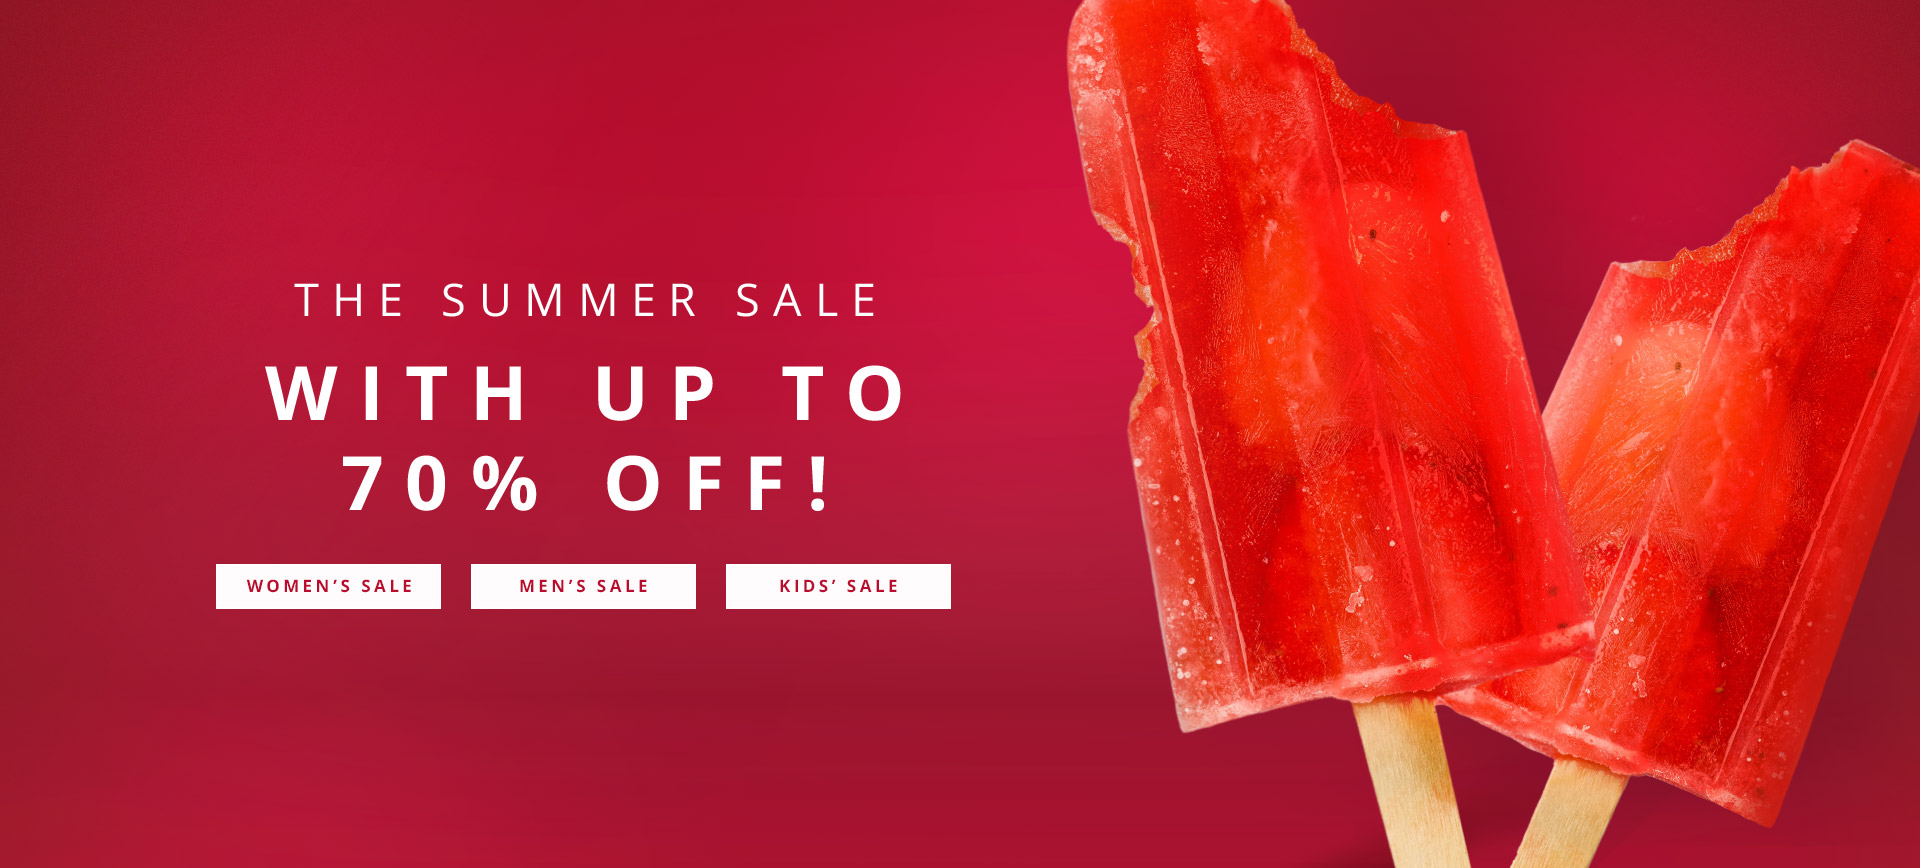 Esprit: summer sale up to 70% off